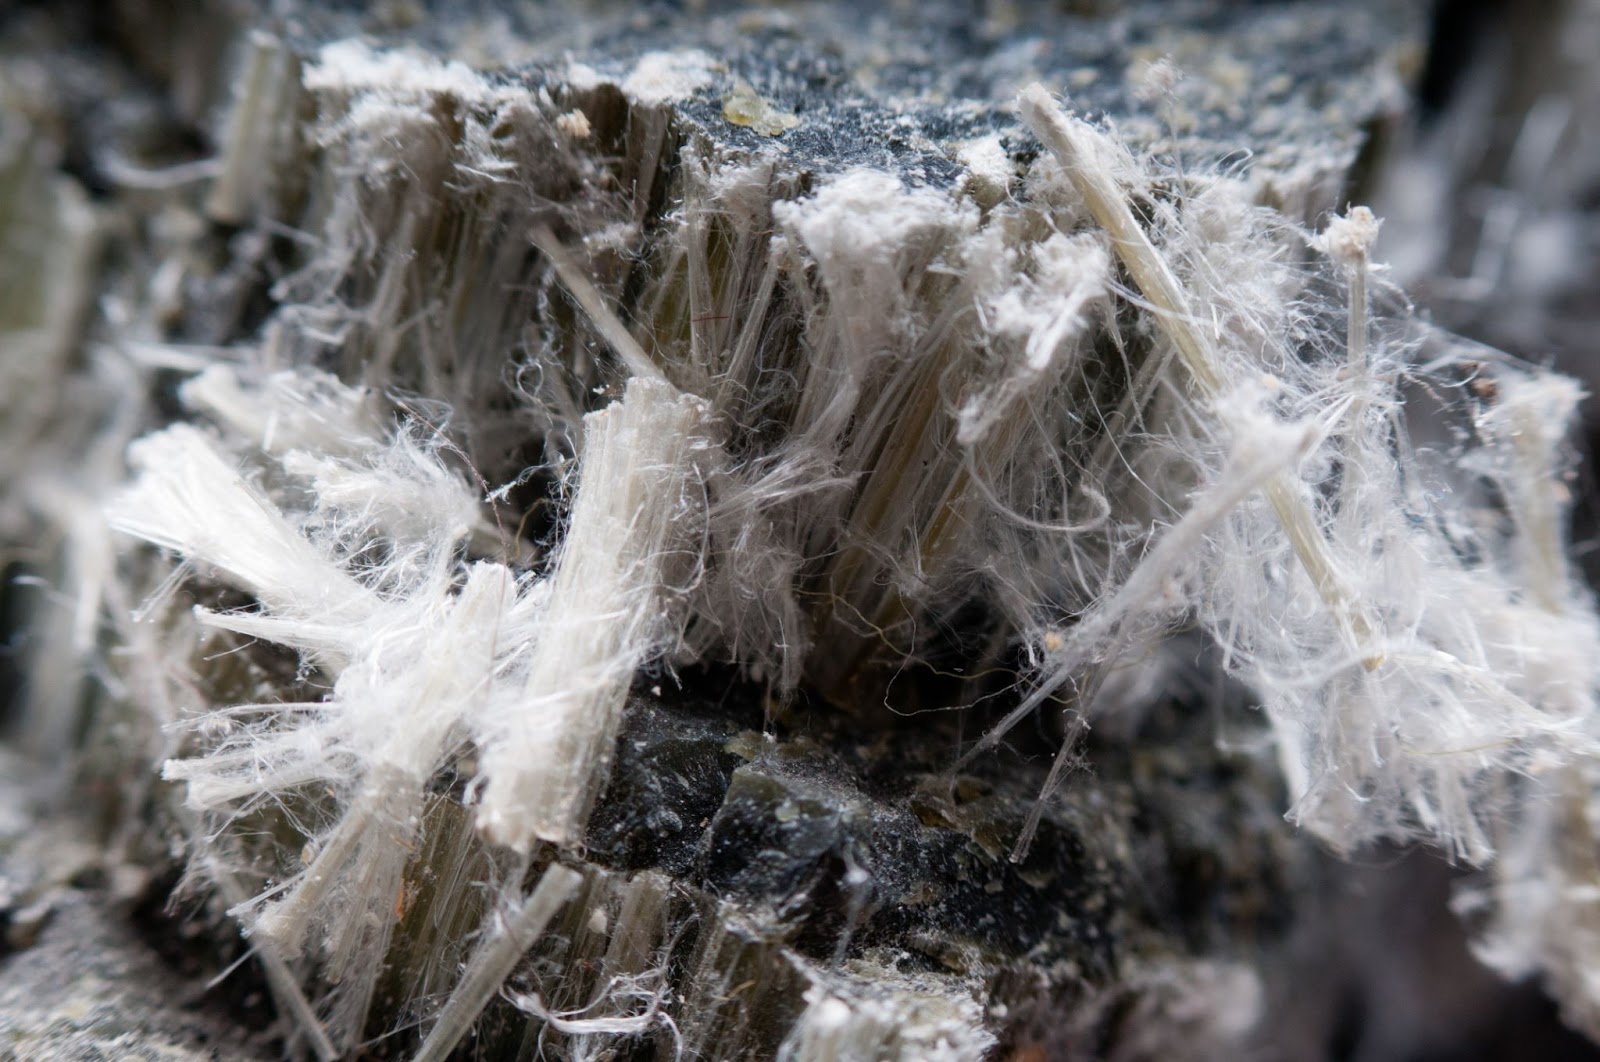 an image of exposed asbestos fibers.